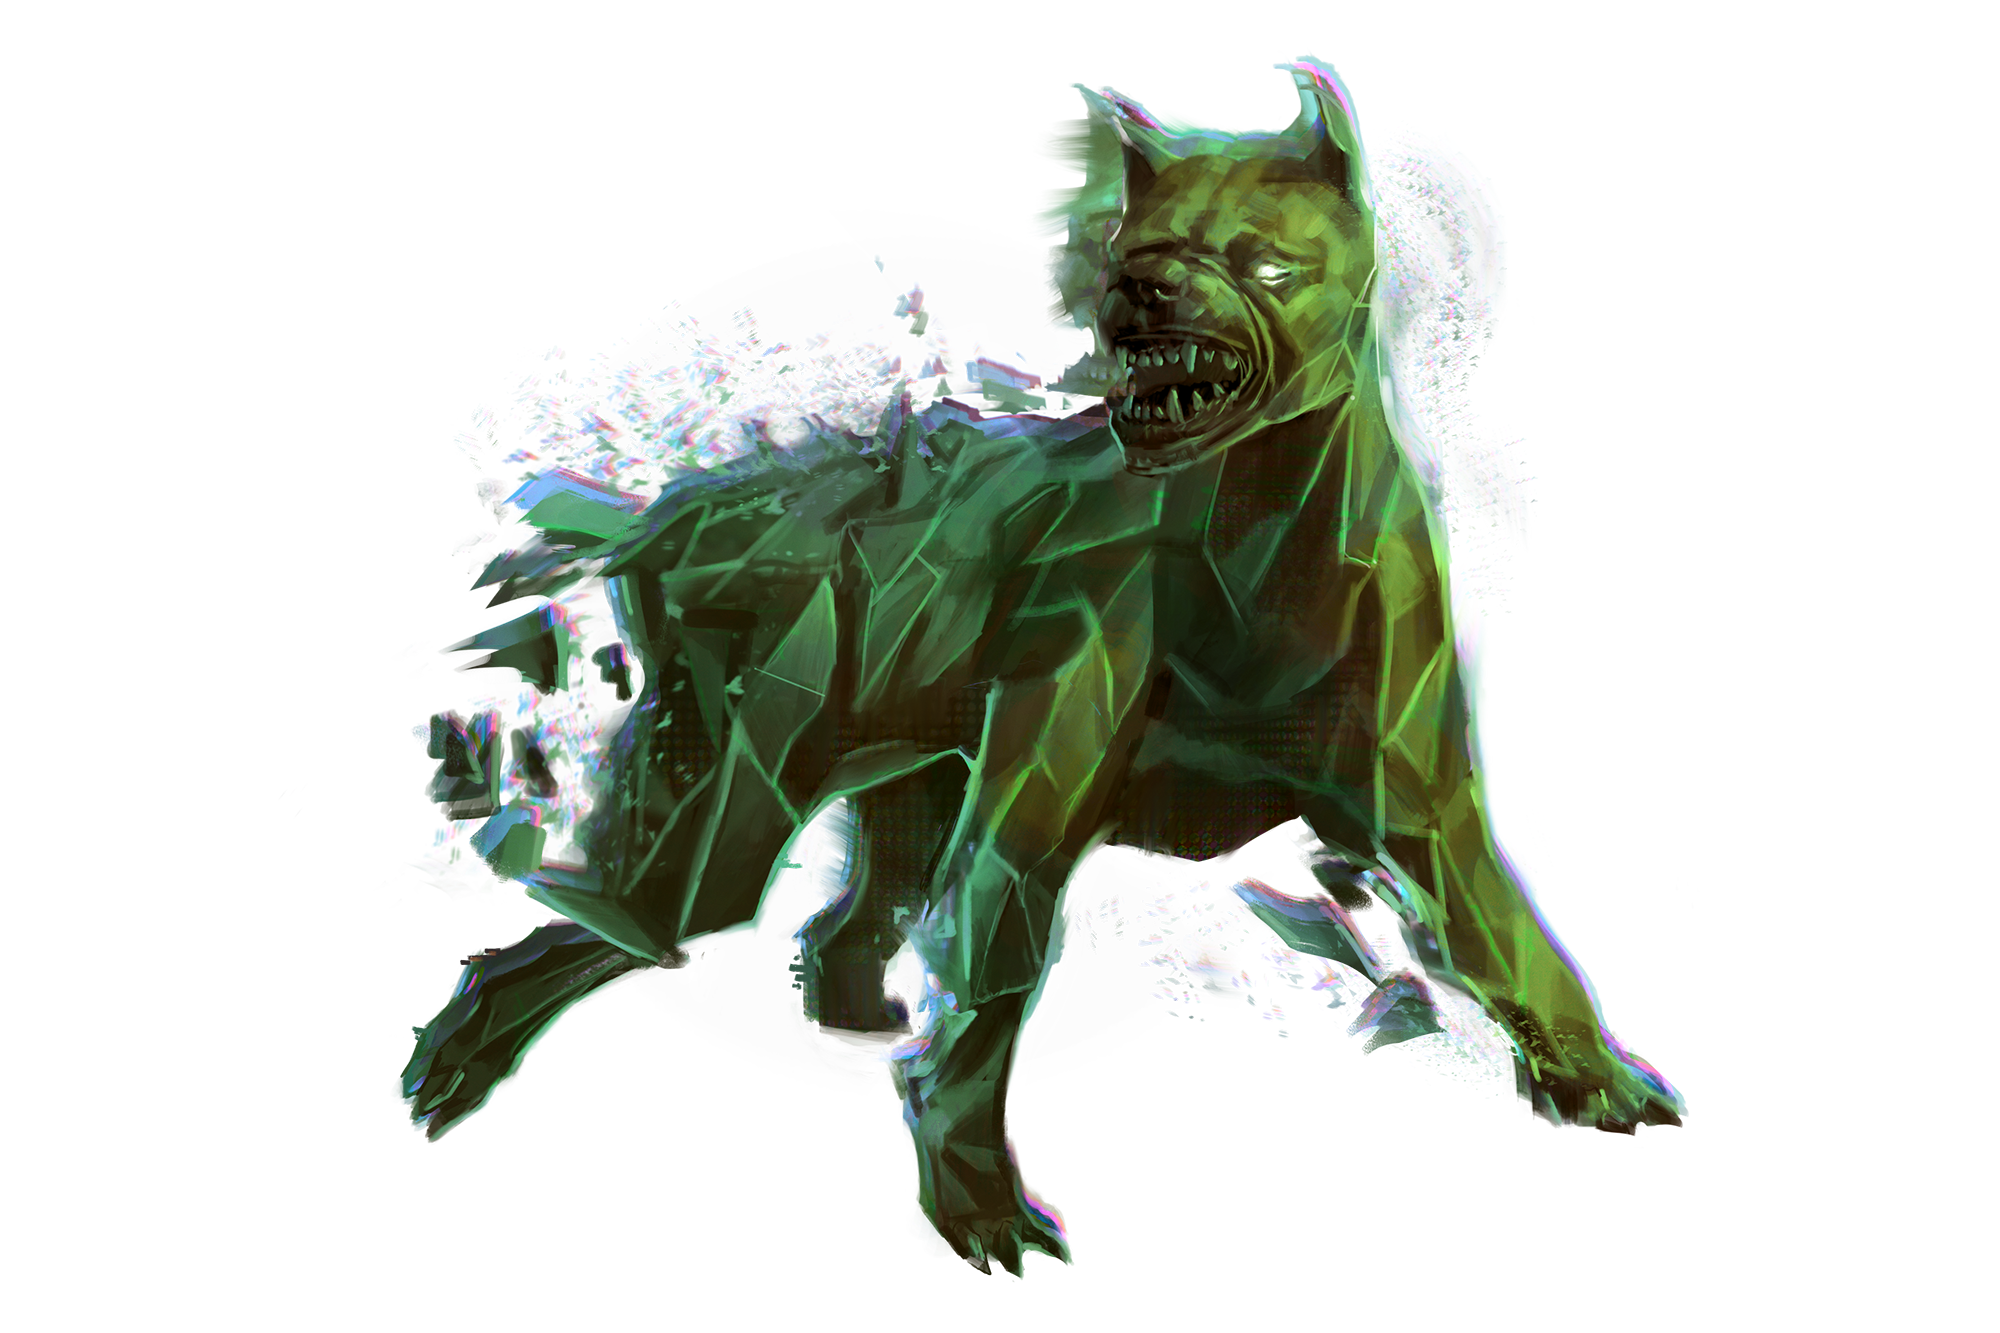 A snarling green fragmenting digital hound